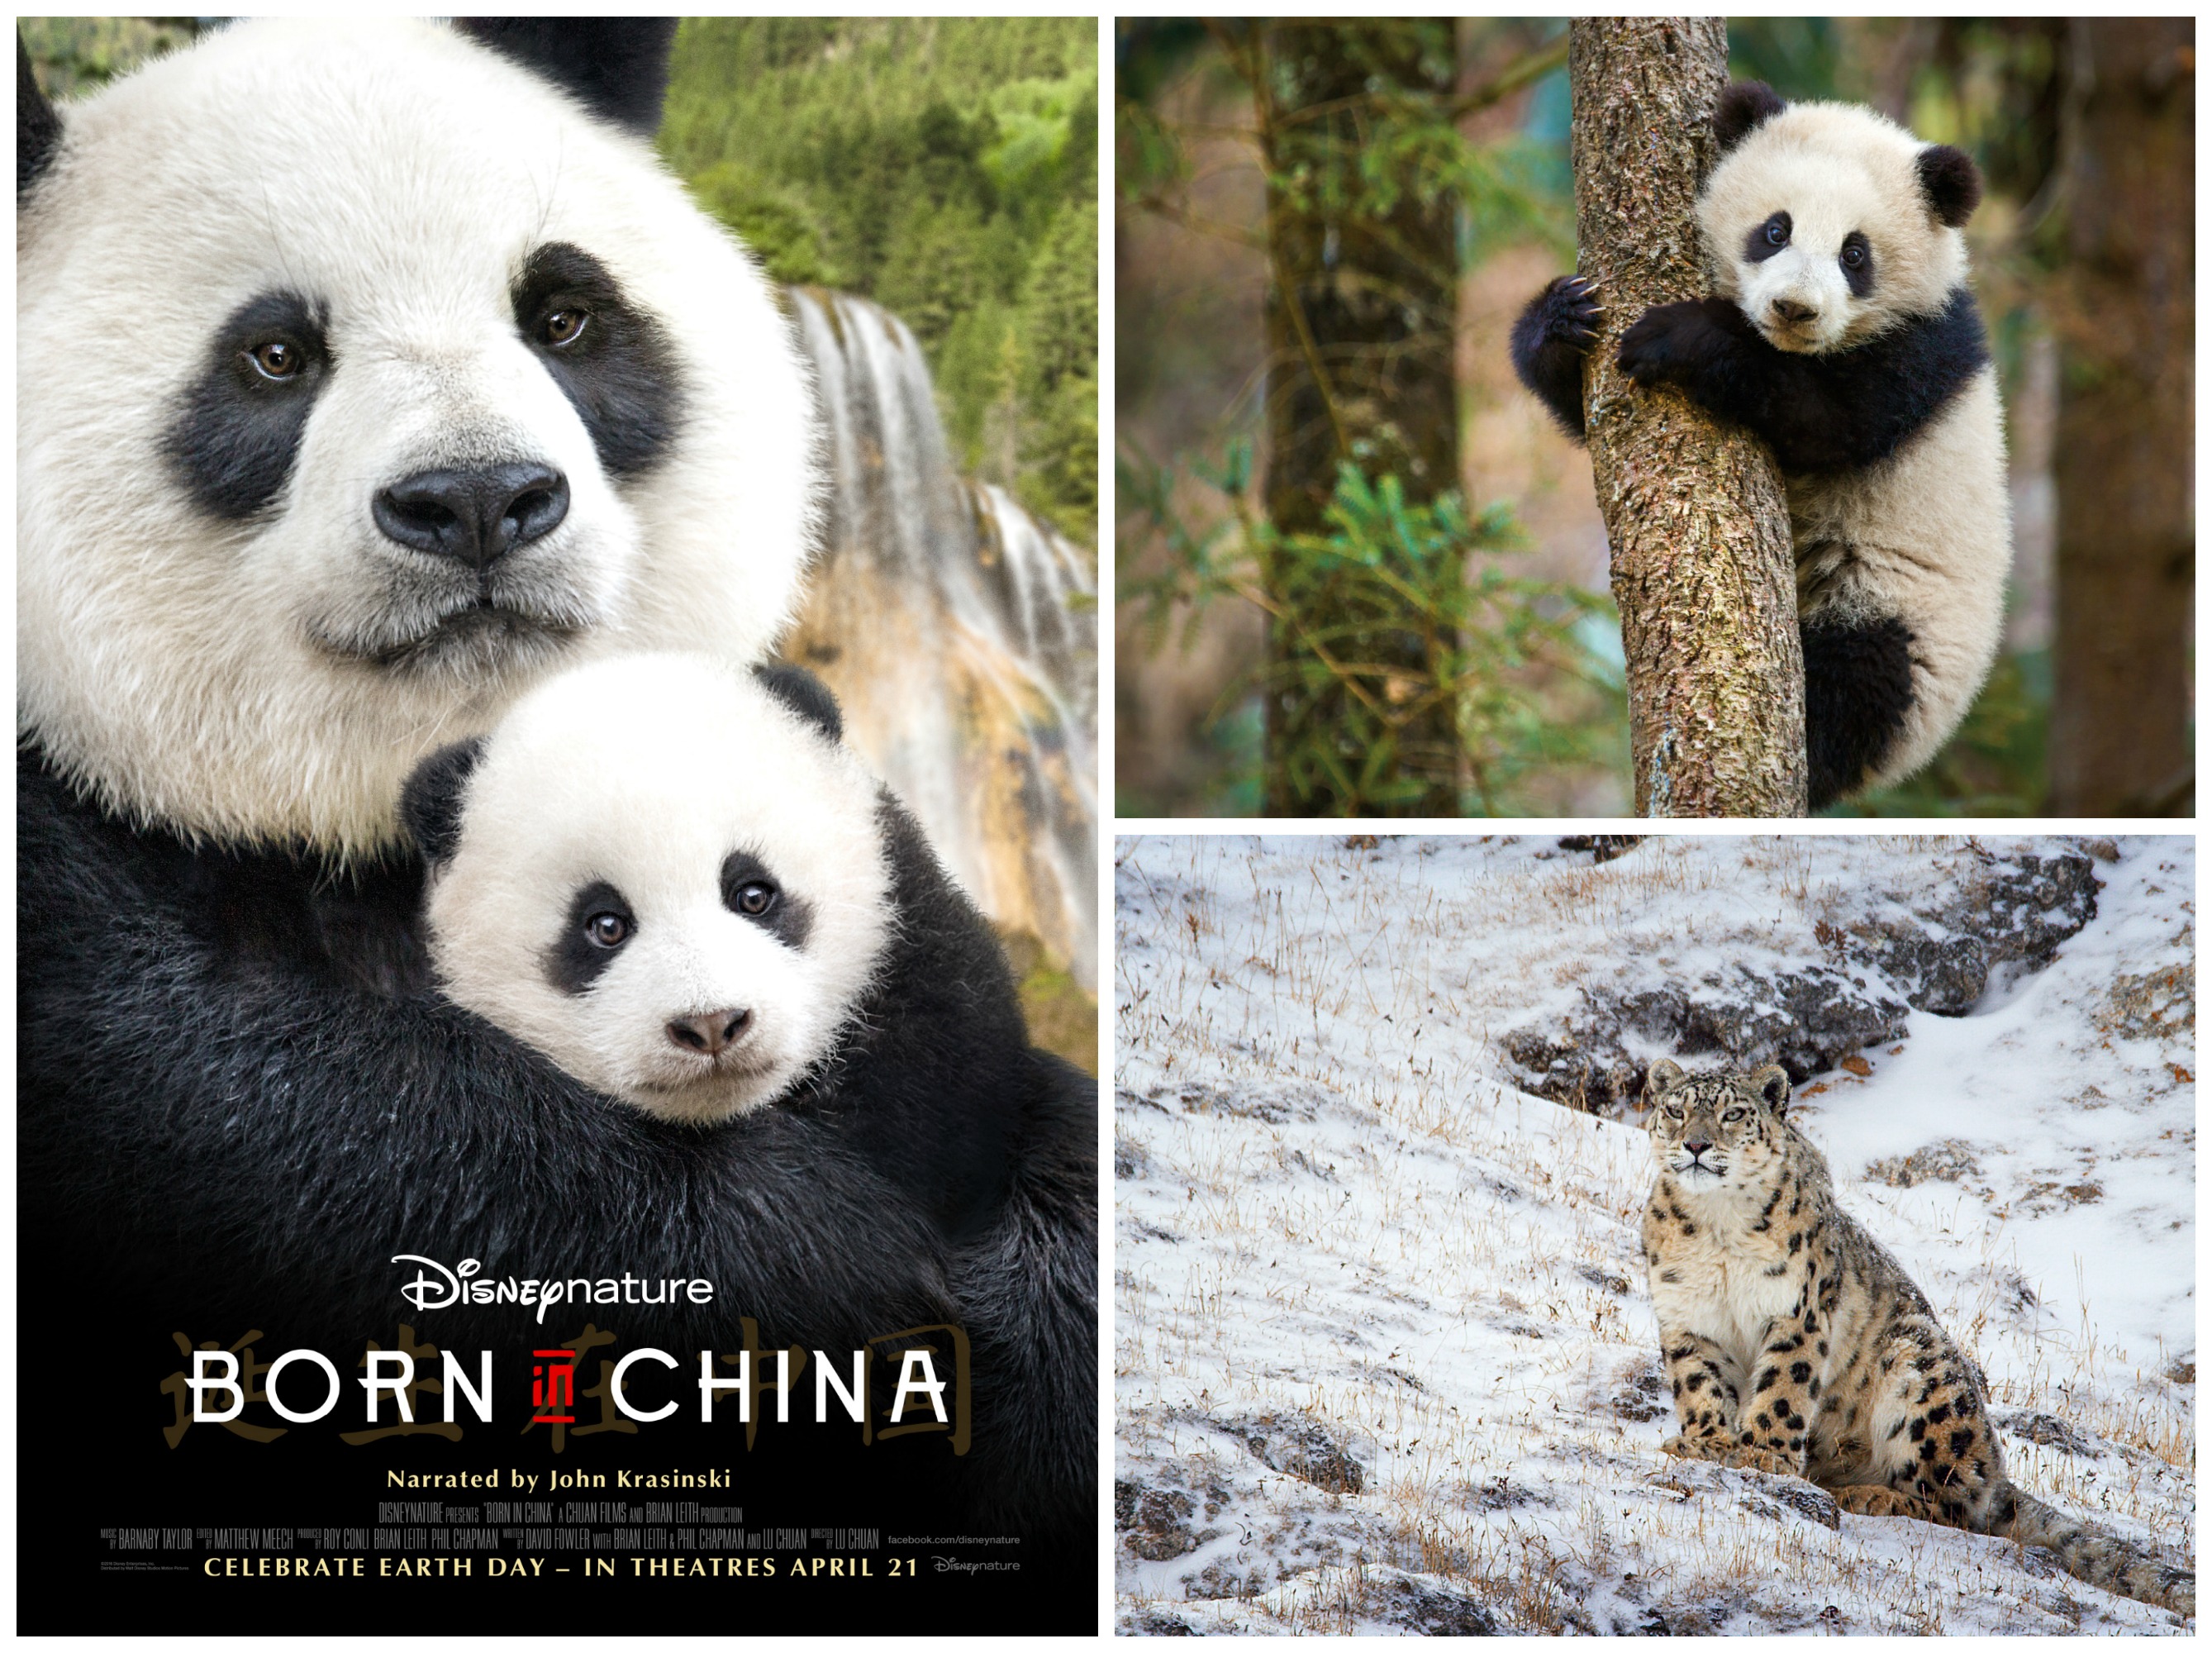 Disneynature's "Born in China" Welcomes John Krasinski as Narrator #BorninChina 5